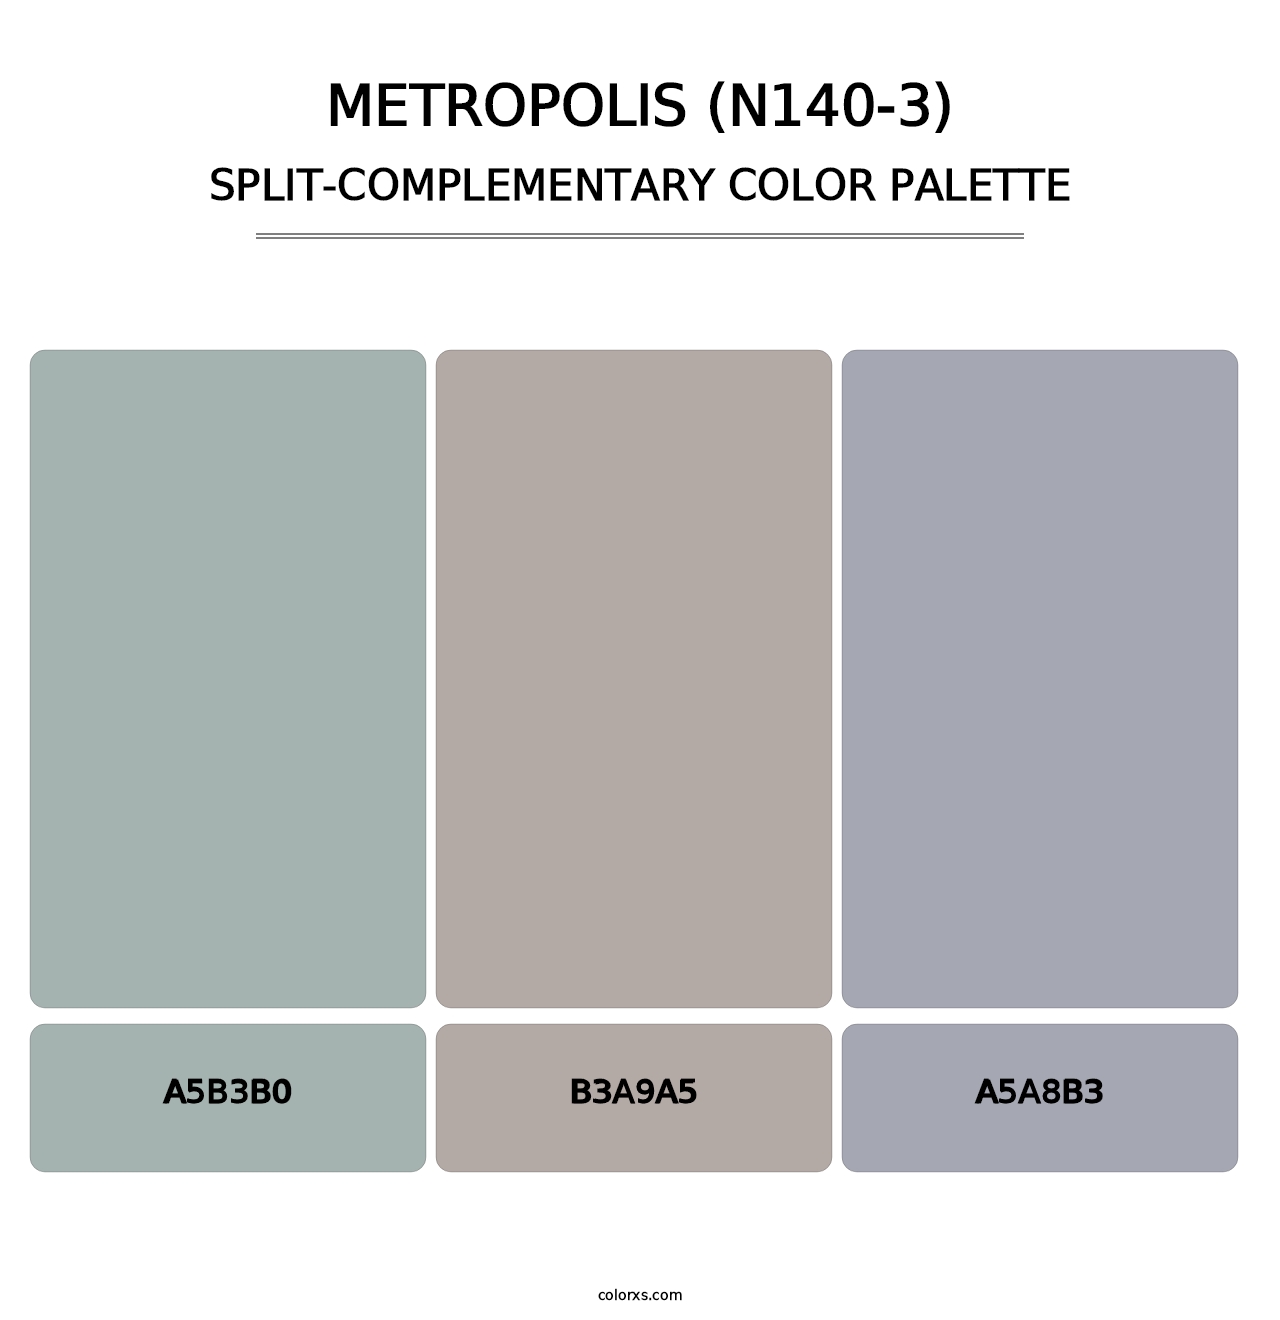 Metropolis (N140-3) - Split-Complementary Color Palette